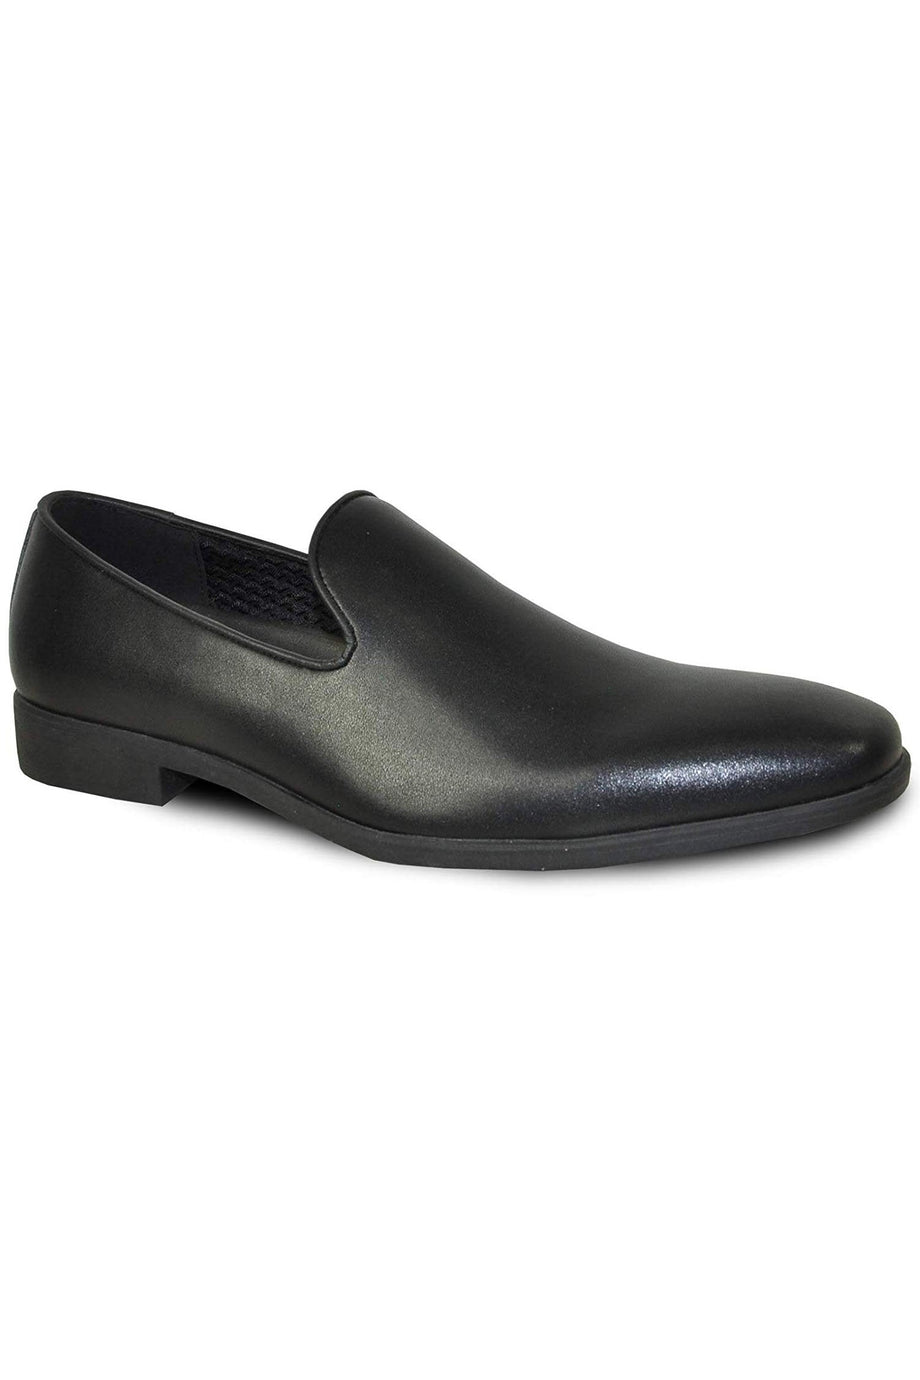 Vangelo "Galileo" Black Matte Tuxedo Shoes